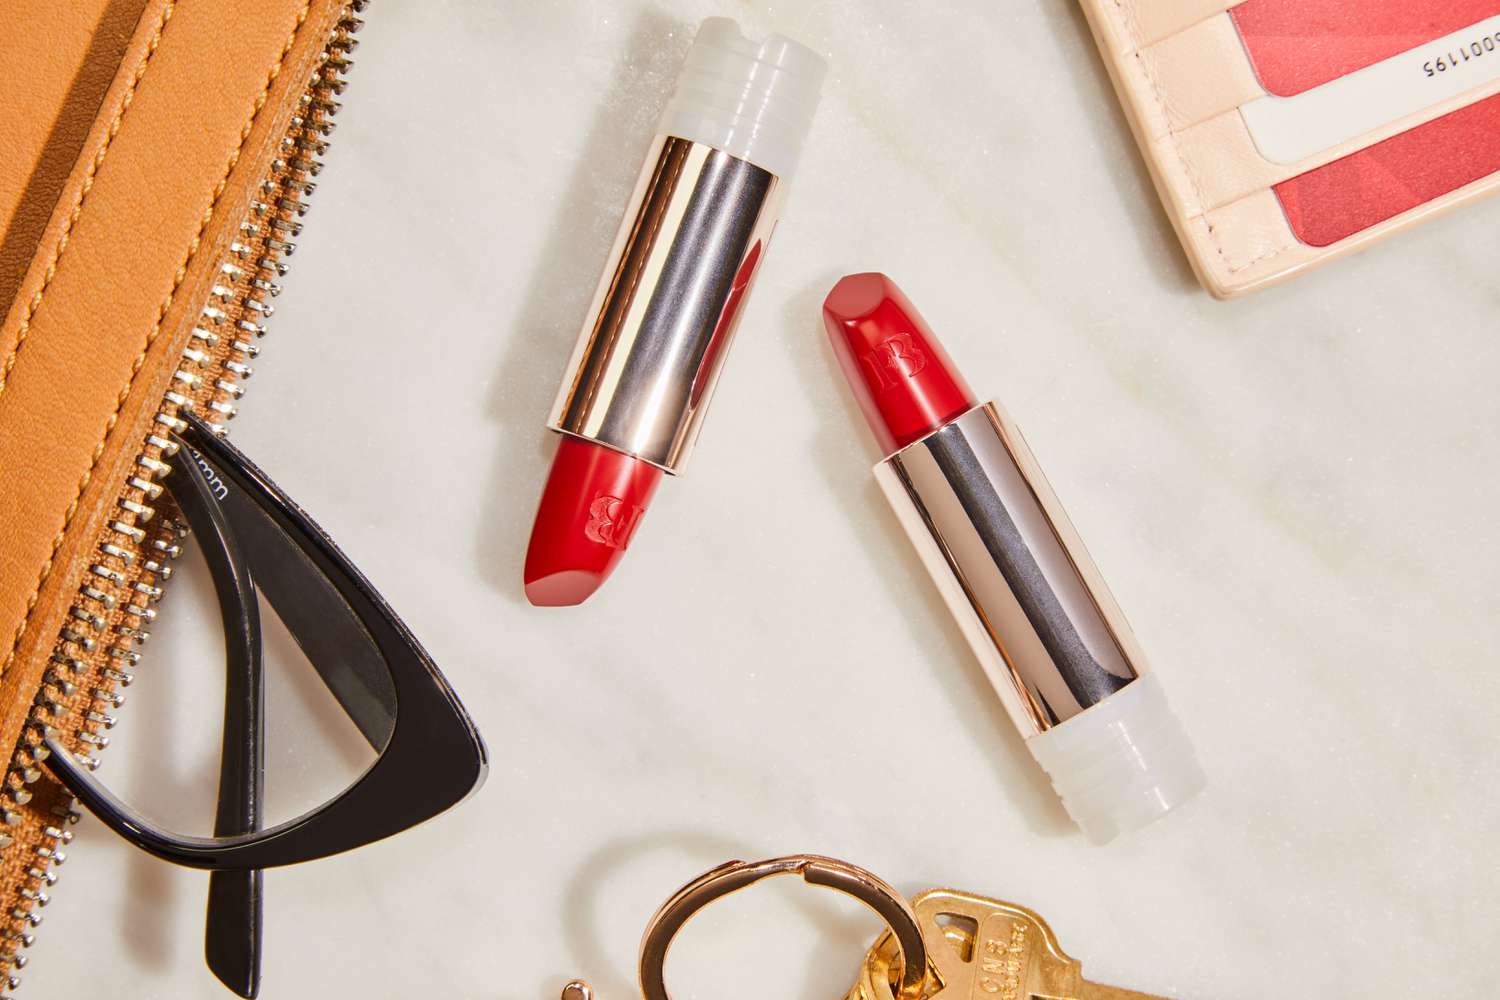 Two tubes of Fenty Beauty Semi-Matte Refillable Lipstick